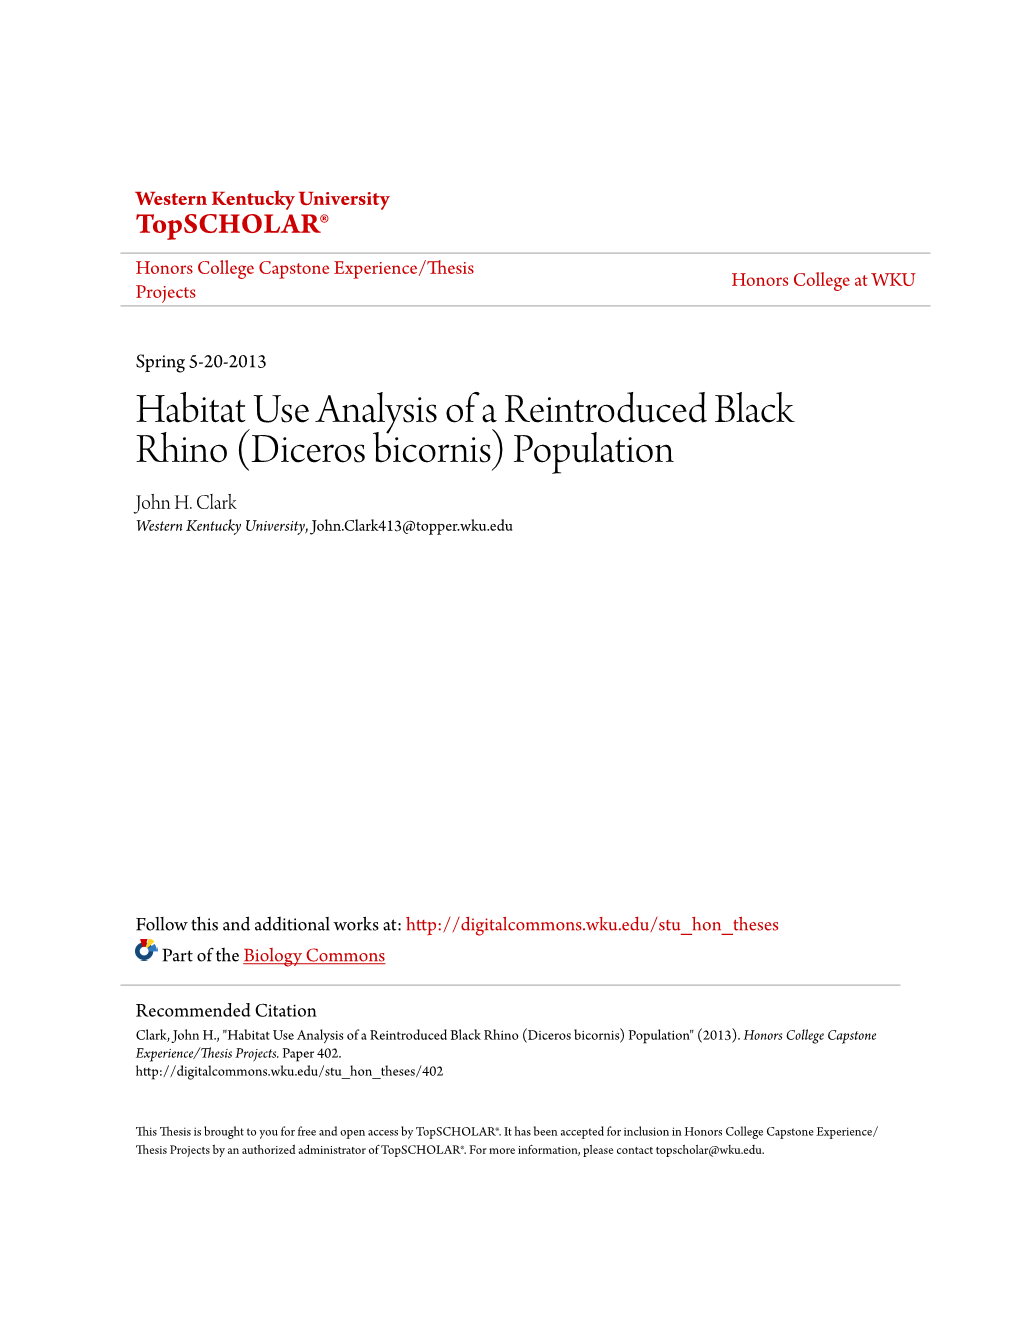 Habitat Use Analysis of a Reintroduced Black Rhino (Diceros Bicornis) Population John H